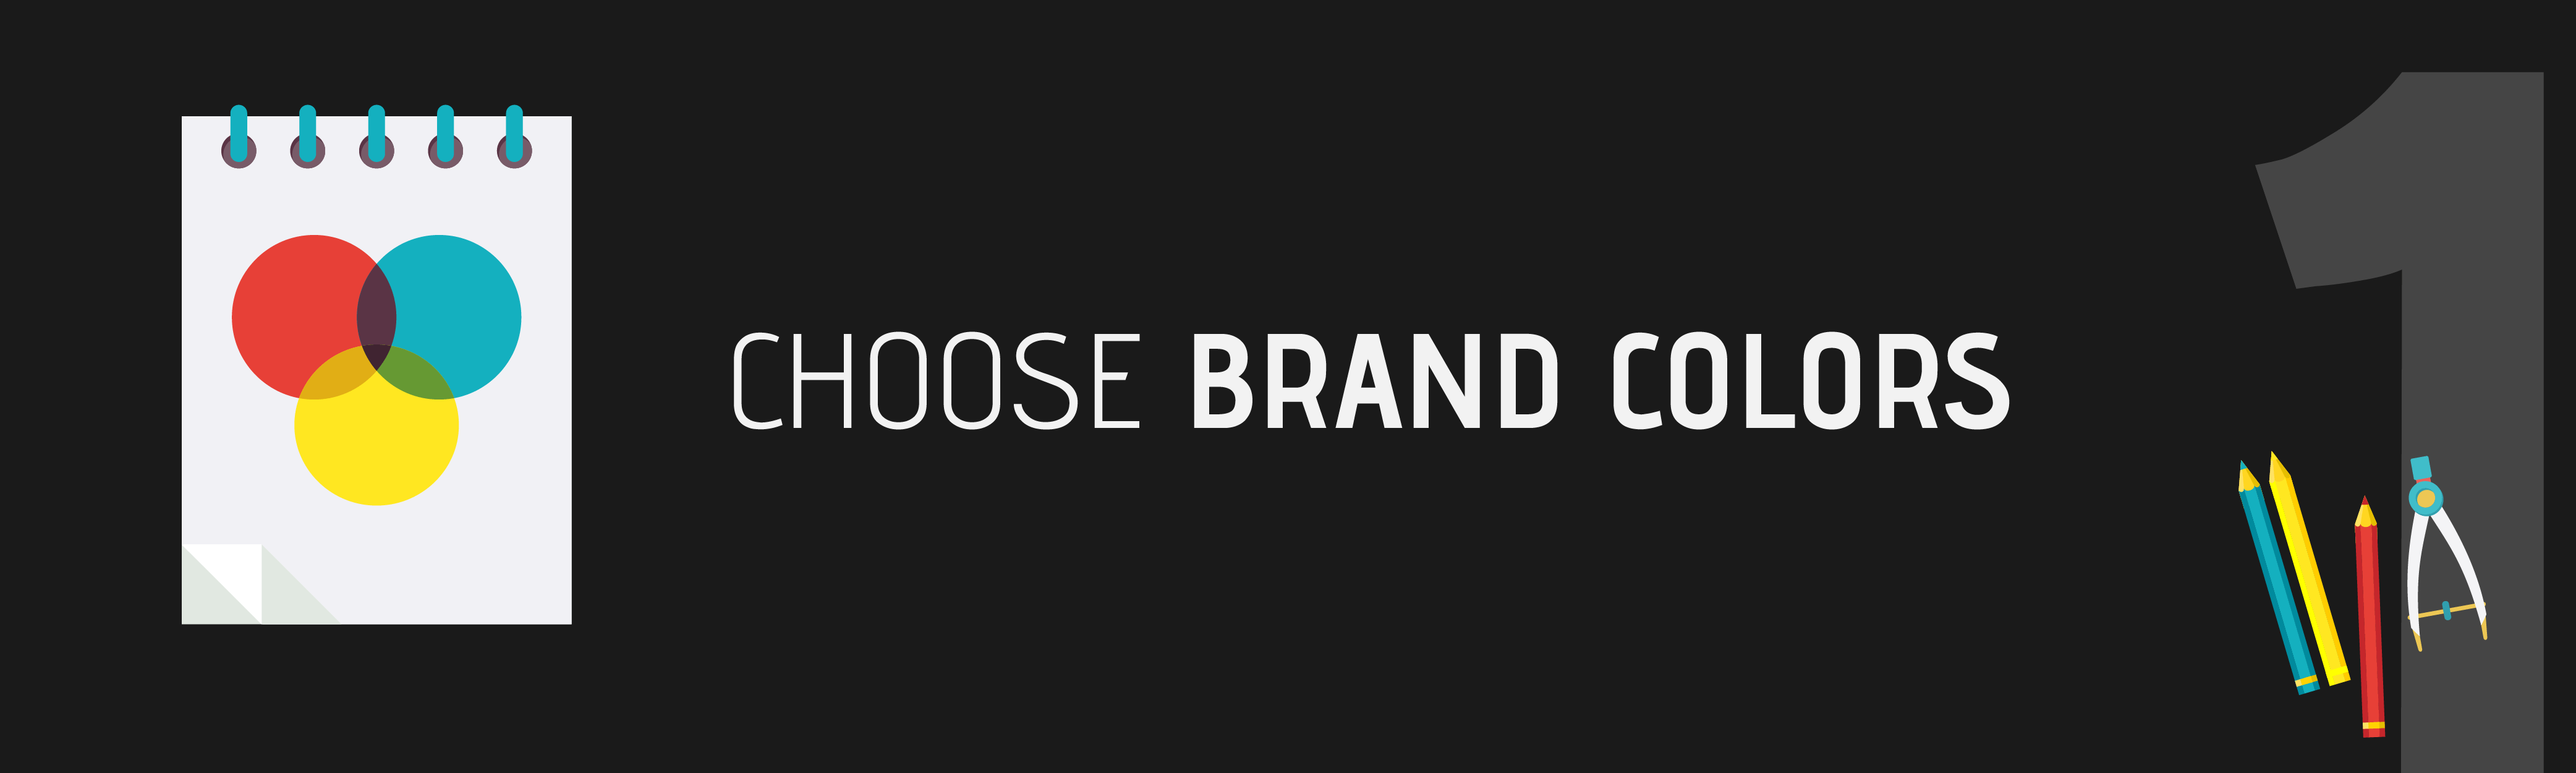 Step 1: Choose Brand Colors